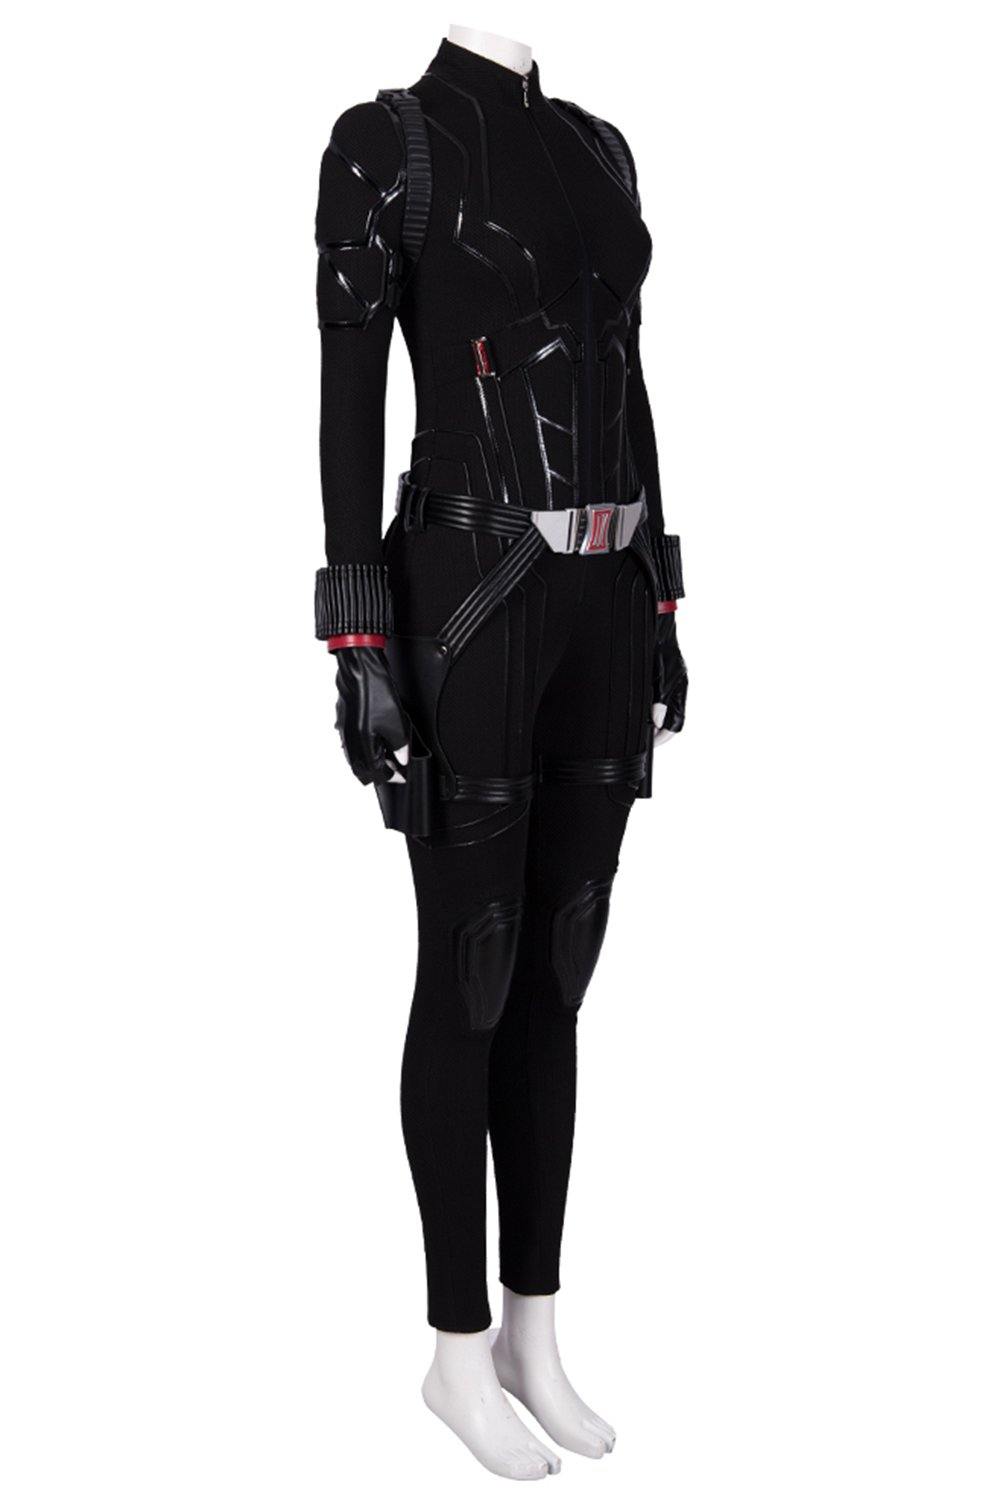 Avengers 4 Avengers: Endgame Black Widow Cosplay Kostüm NEU Version - cosplaycartde